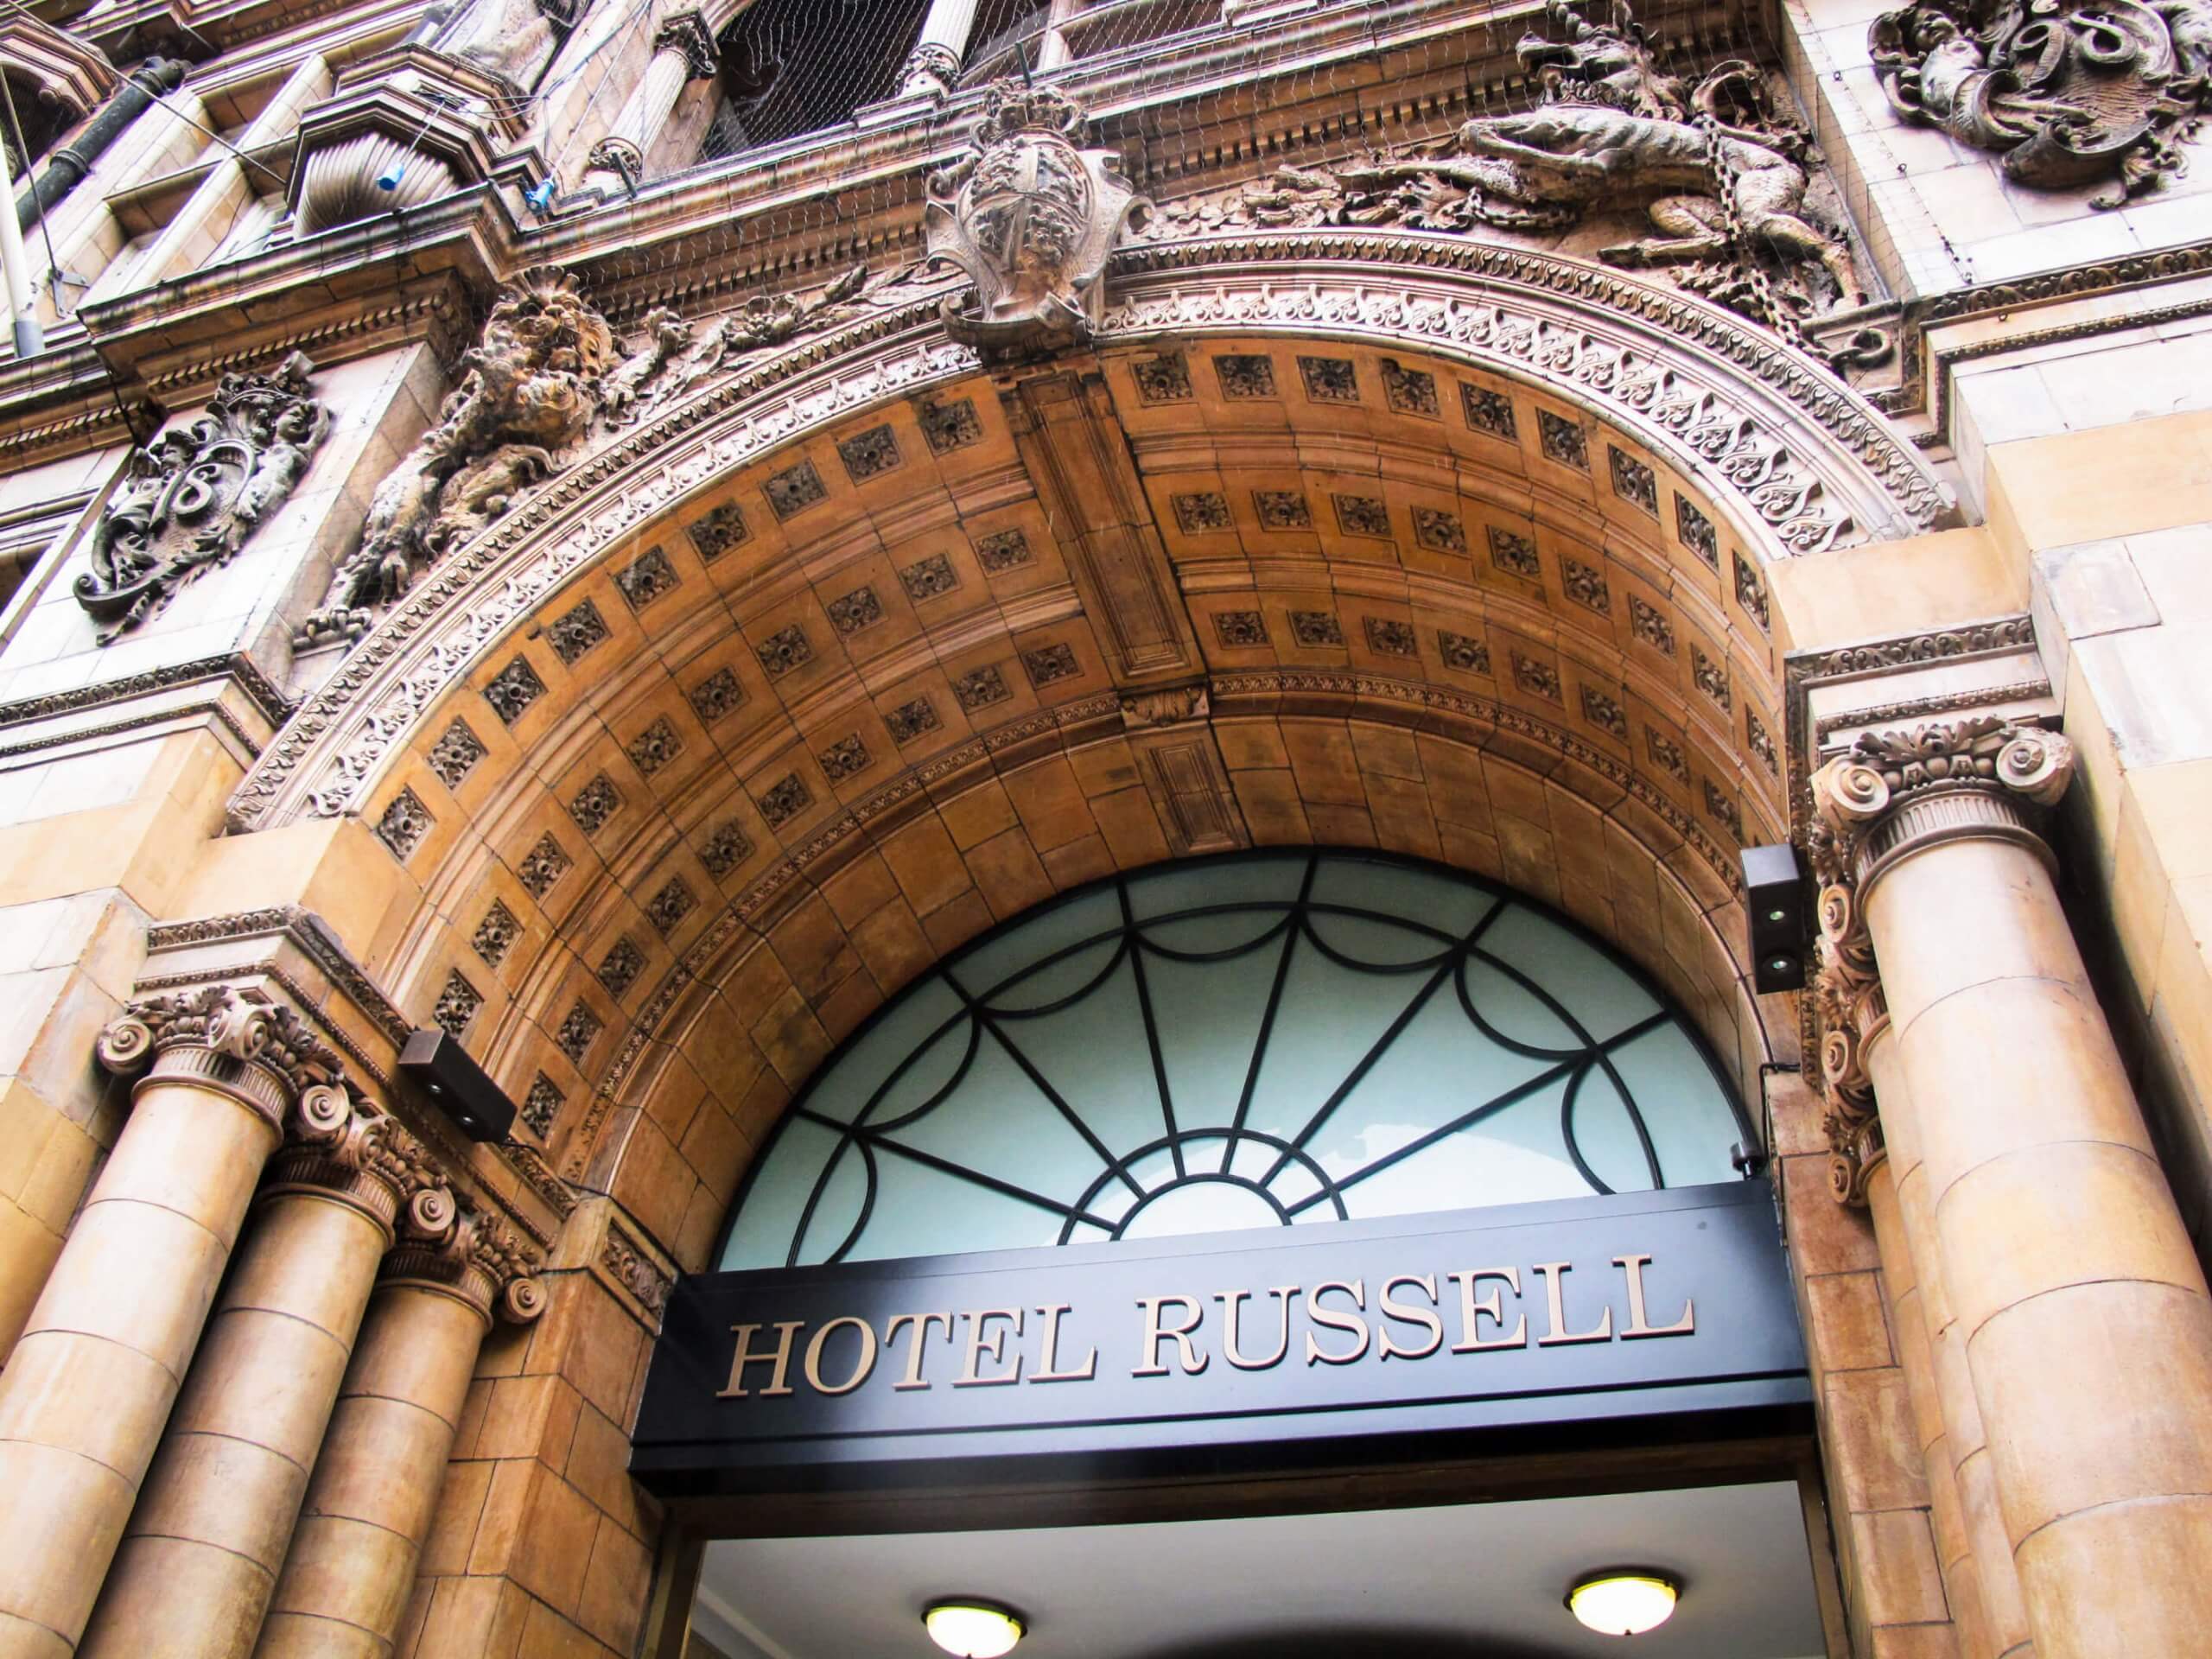 Hotel Russell, London, UK